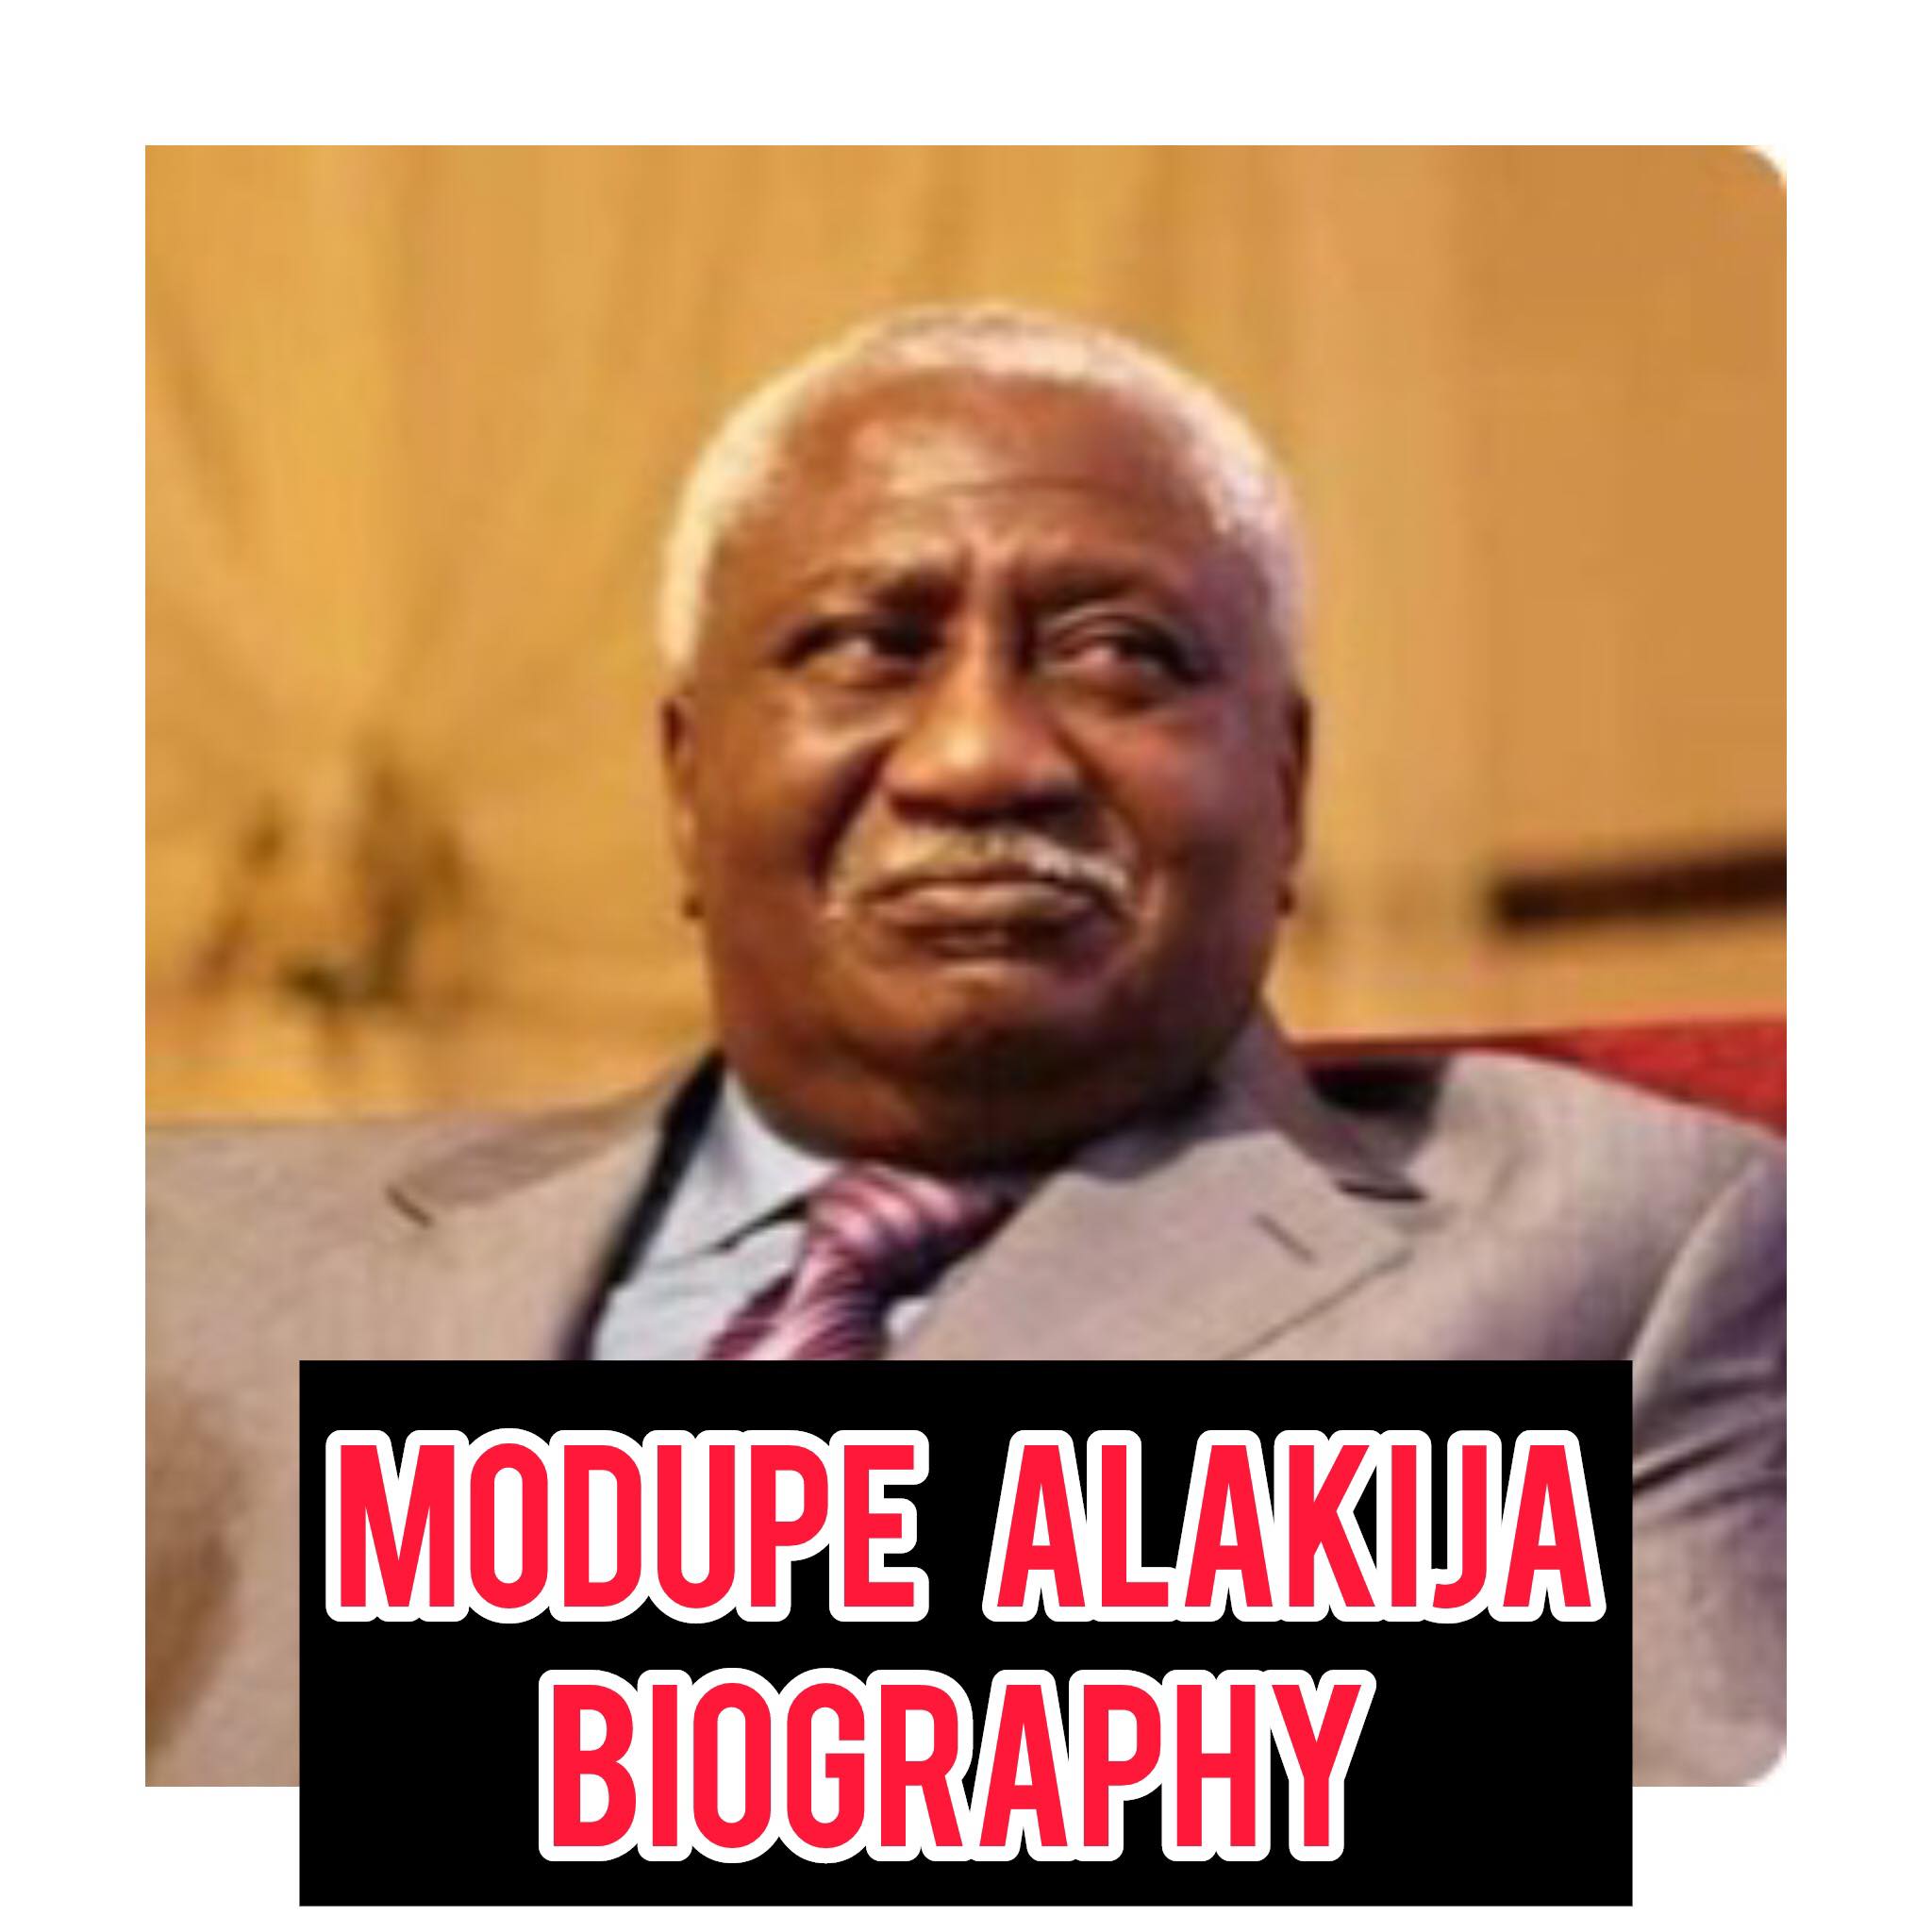 Modupe Alakija Biography